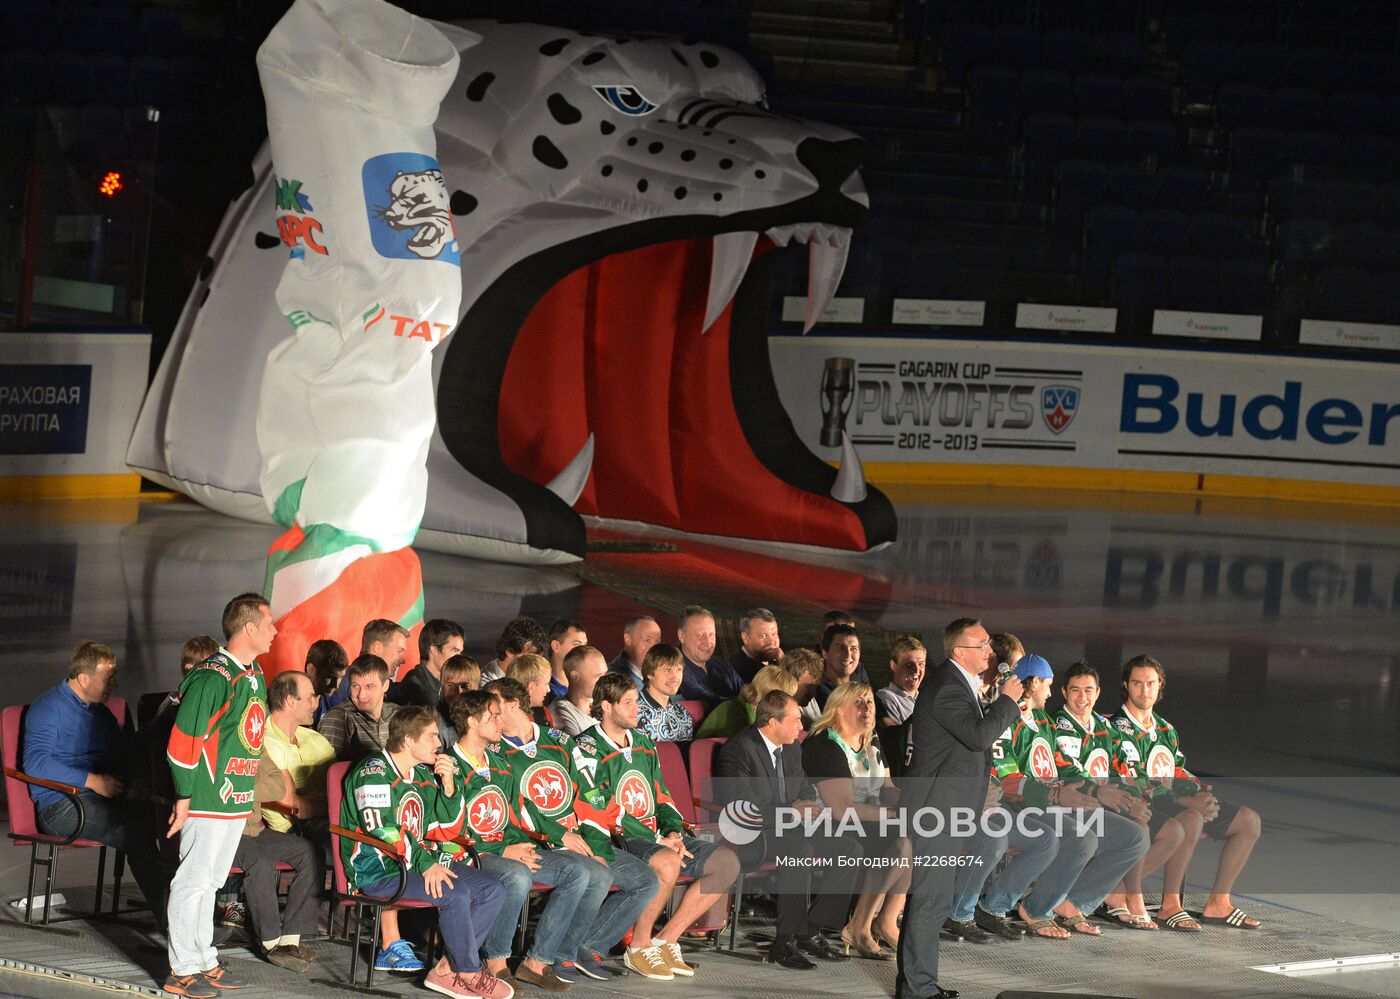 Хоккей. Презентация ХК "АК Барс" сезона 2013/14